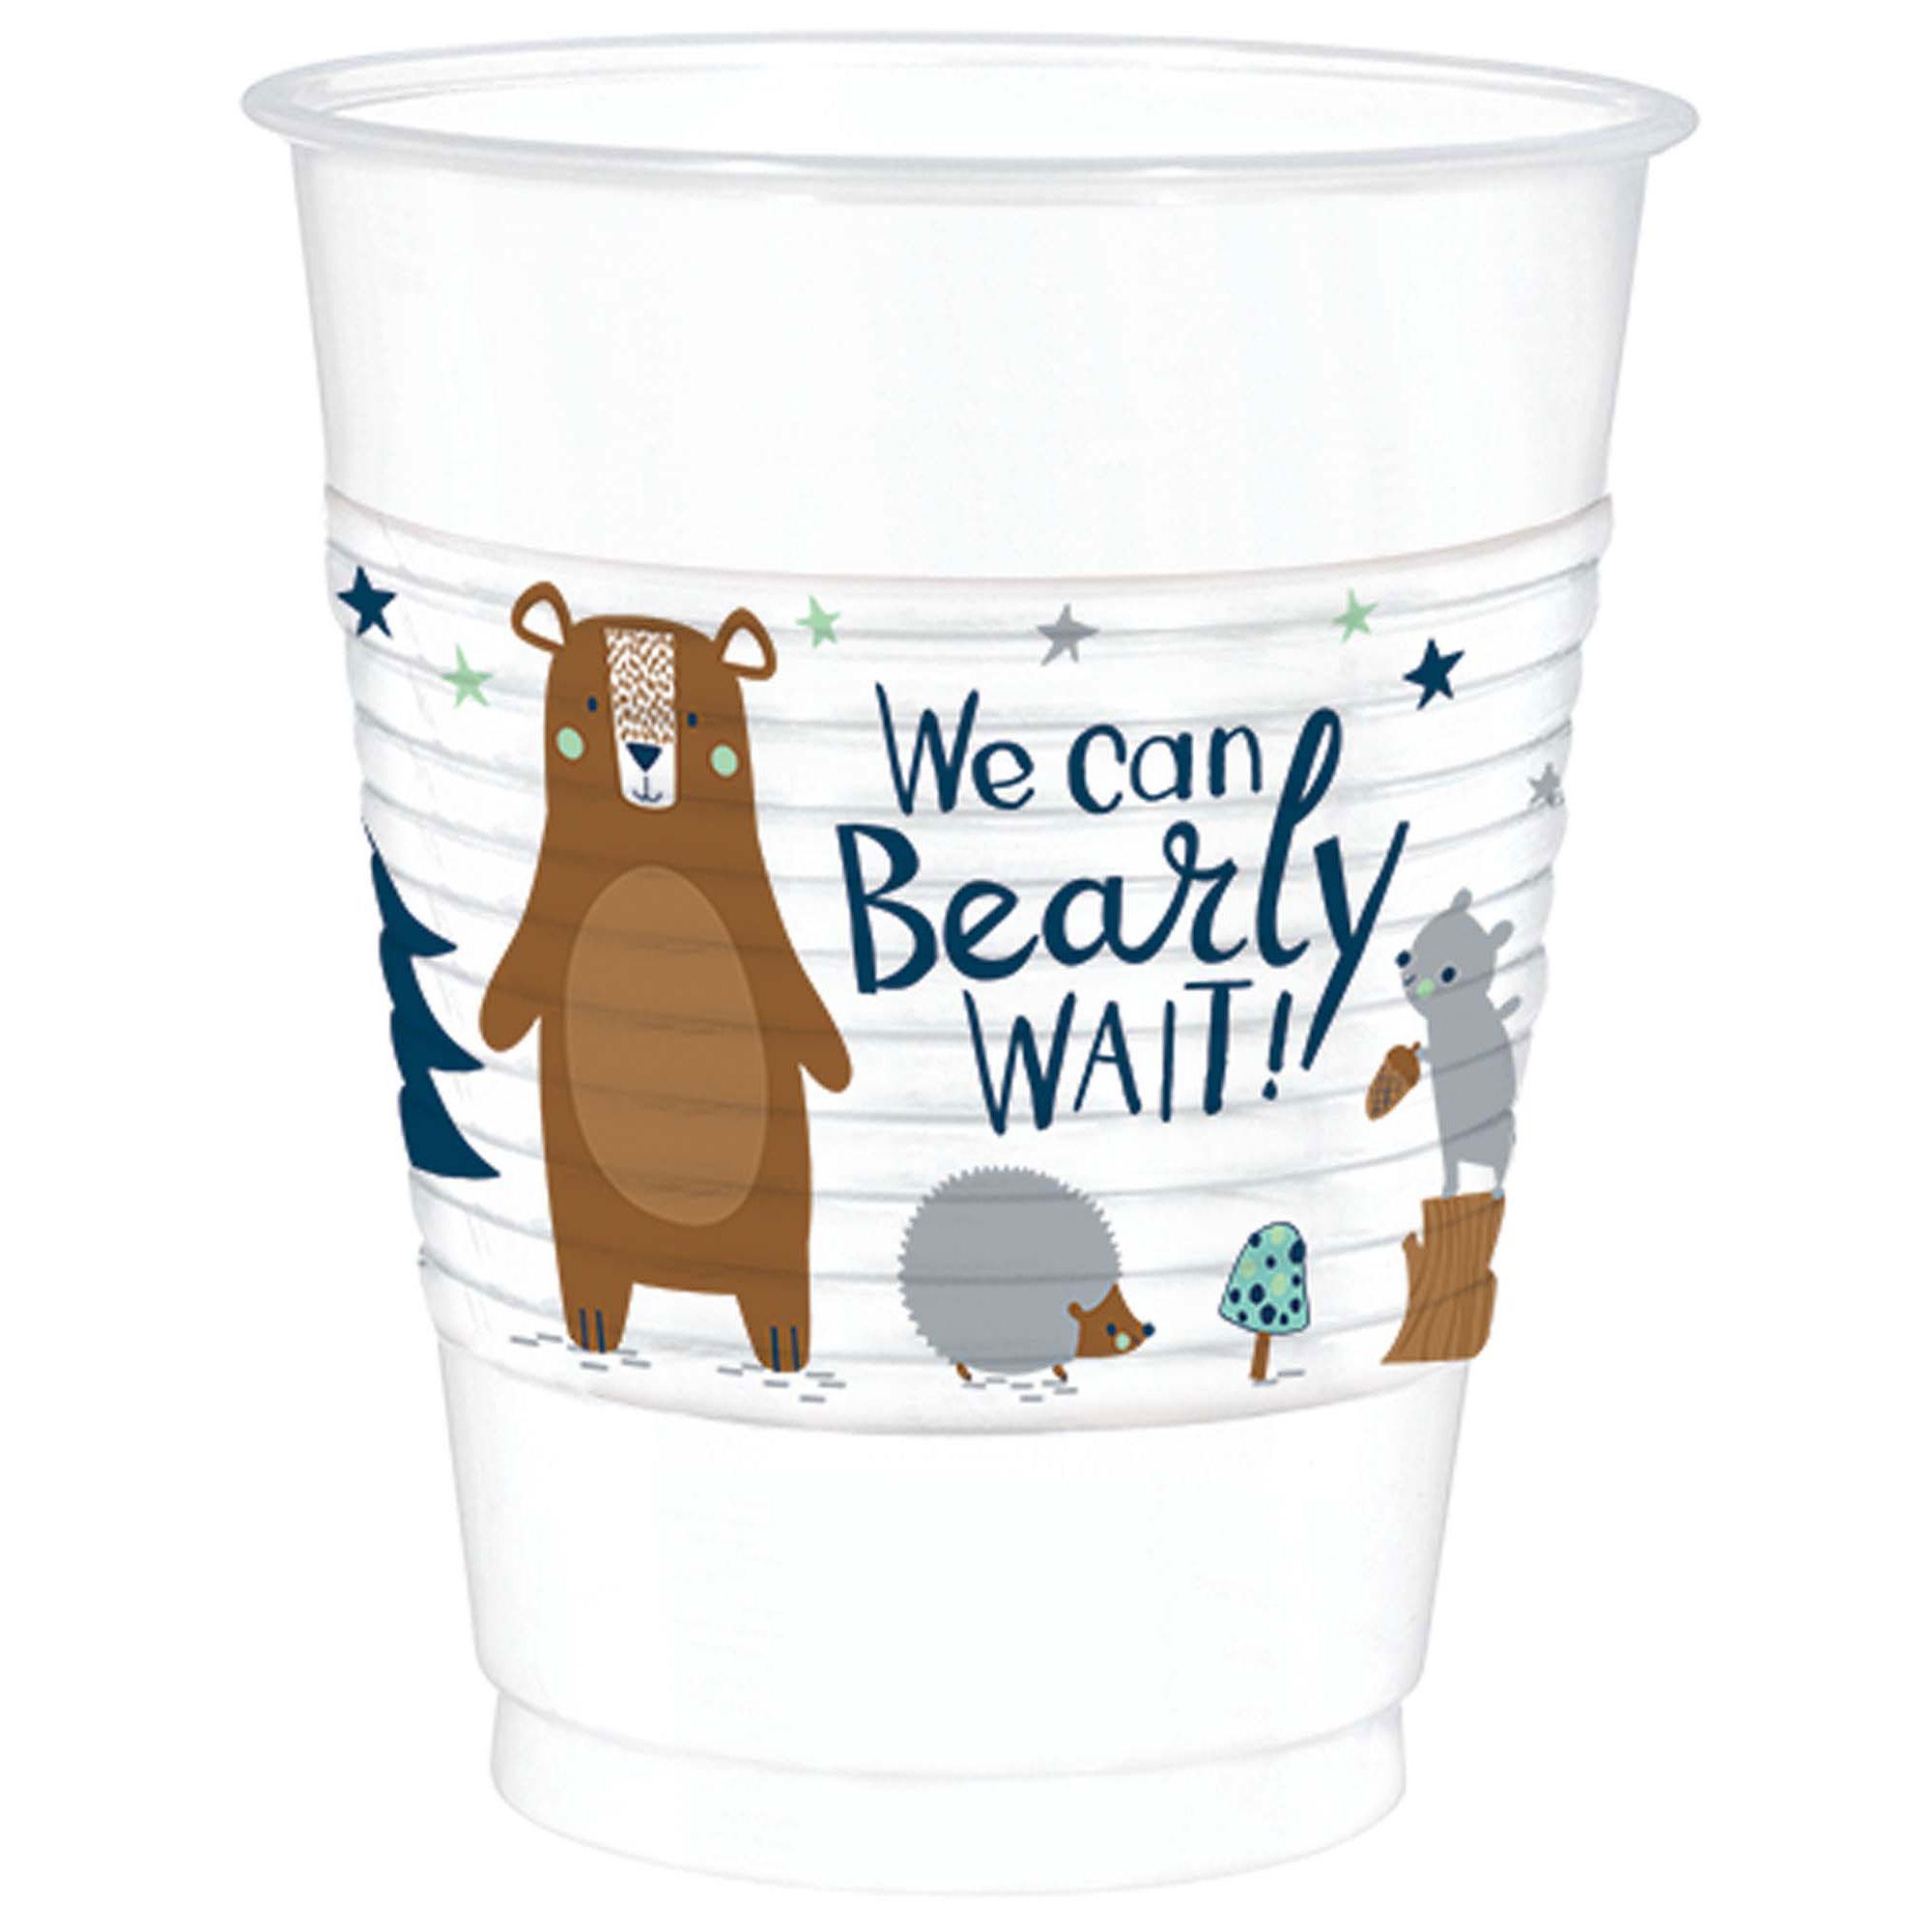 Bear-ly Wait Boy Plastic Cups 16oz, 25pcs Solid Tableware - Party Centre